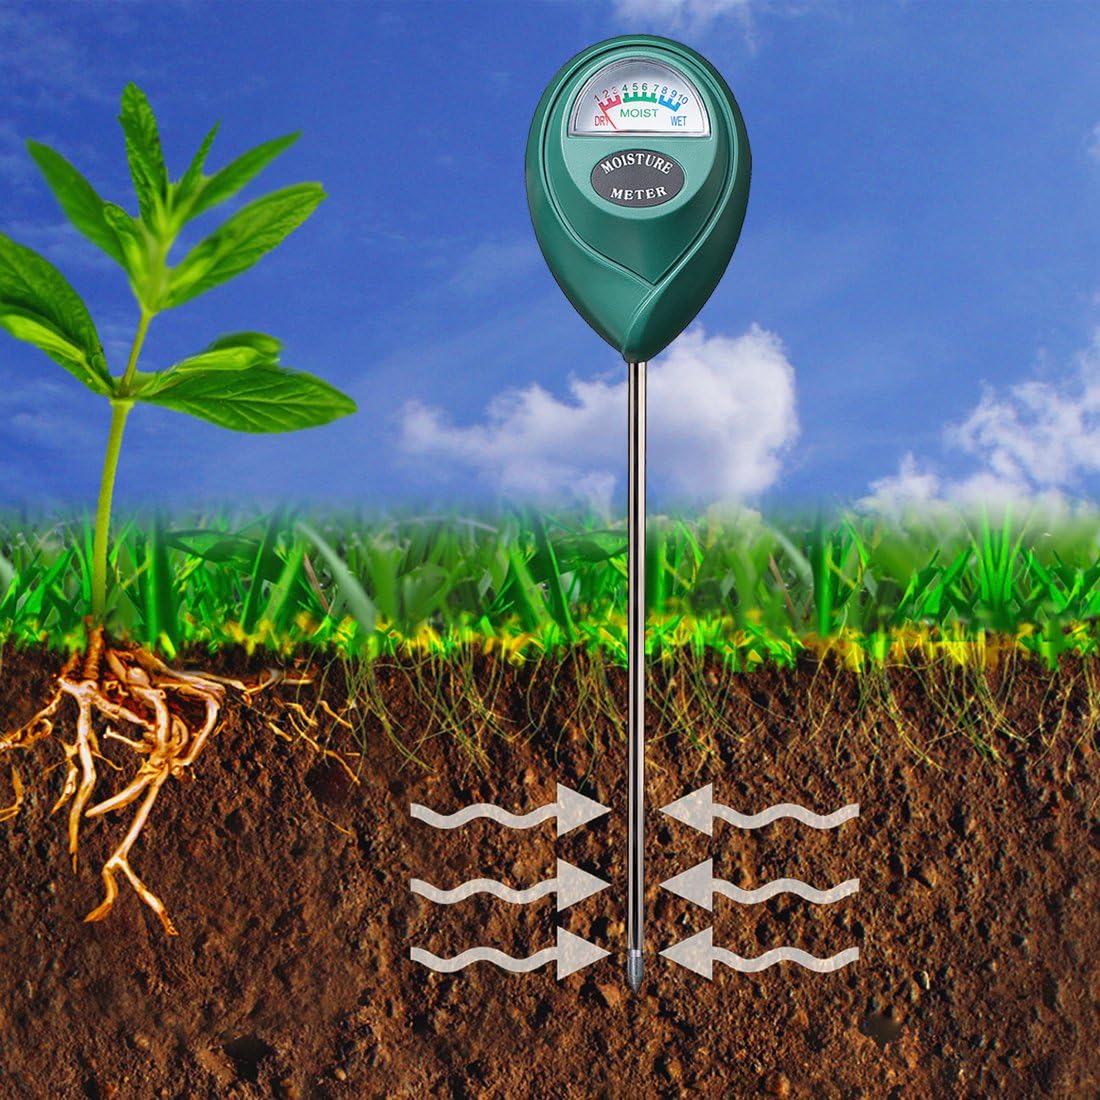 XLUX Soil Moisture Meter